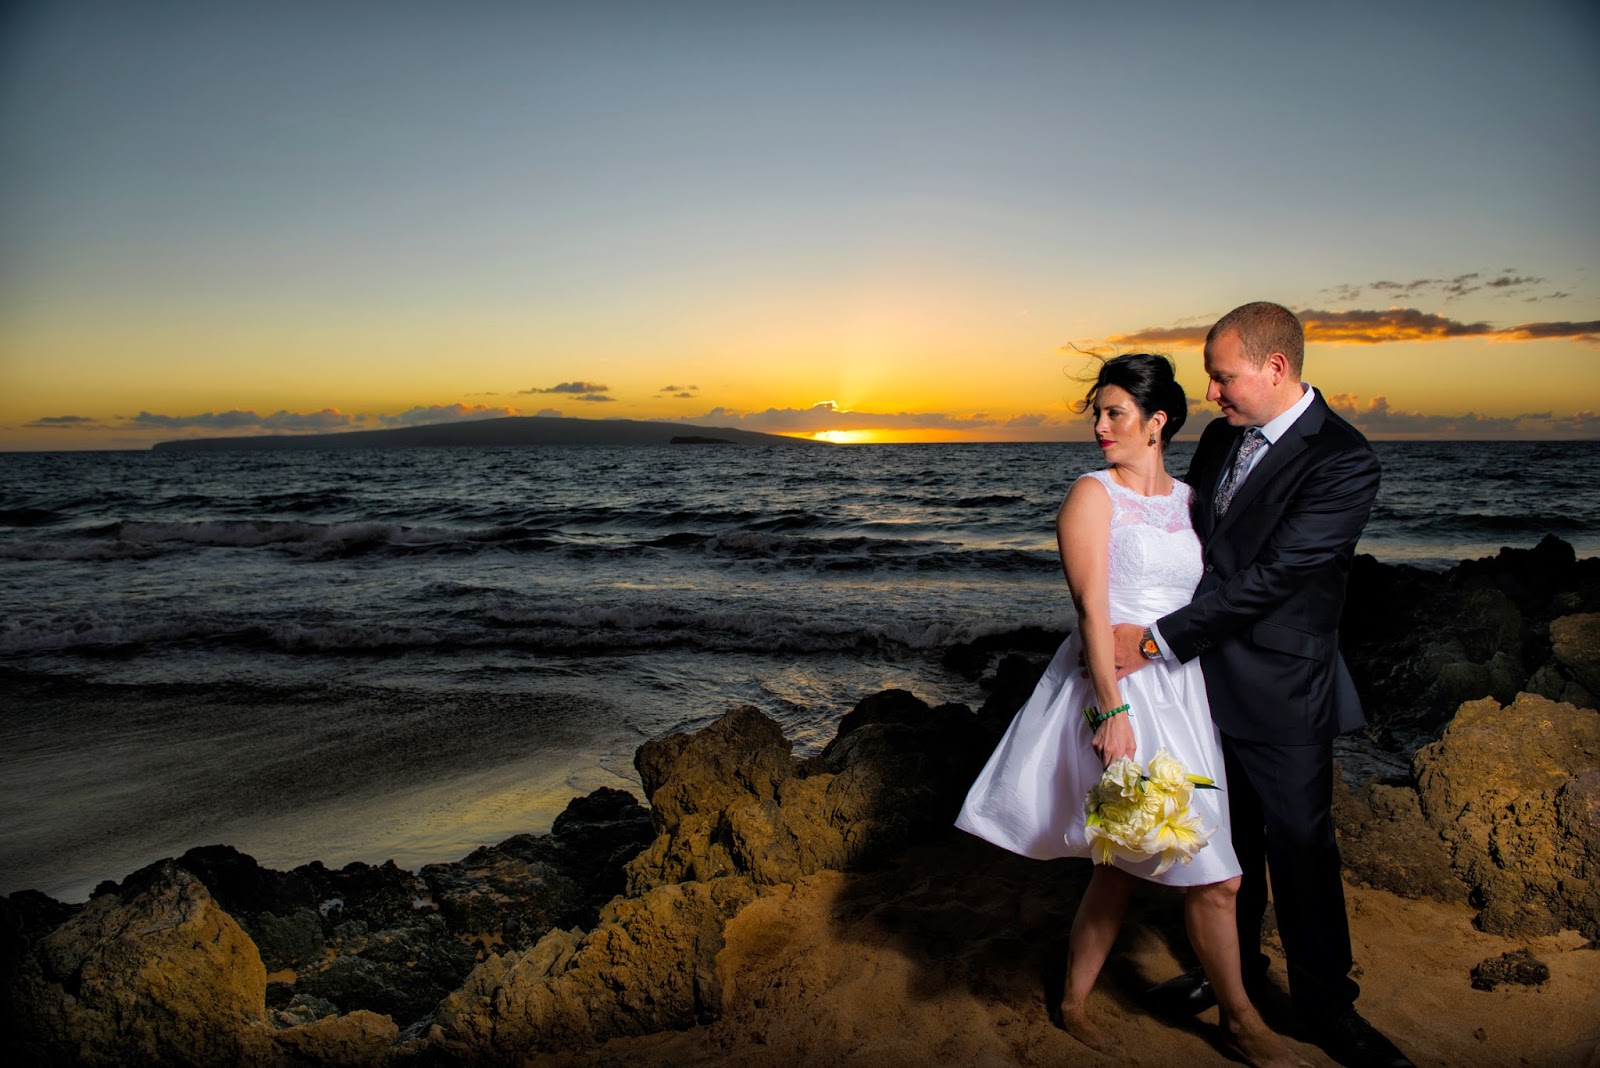 Maui Wedding Planners, Maui wedding photography, Maui Weddings, Maui Sunset Weddings